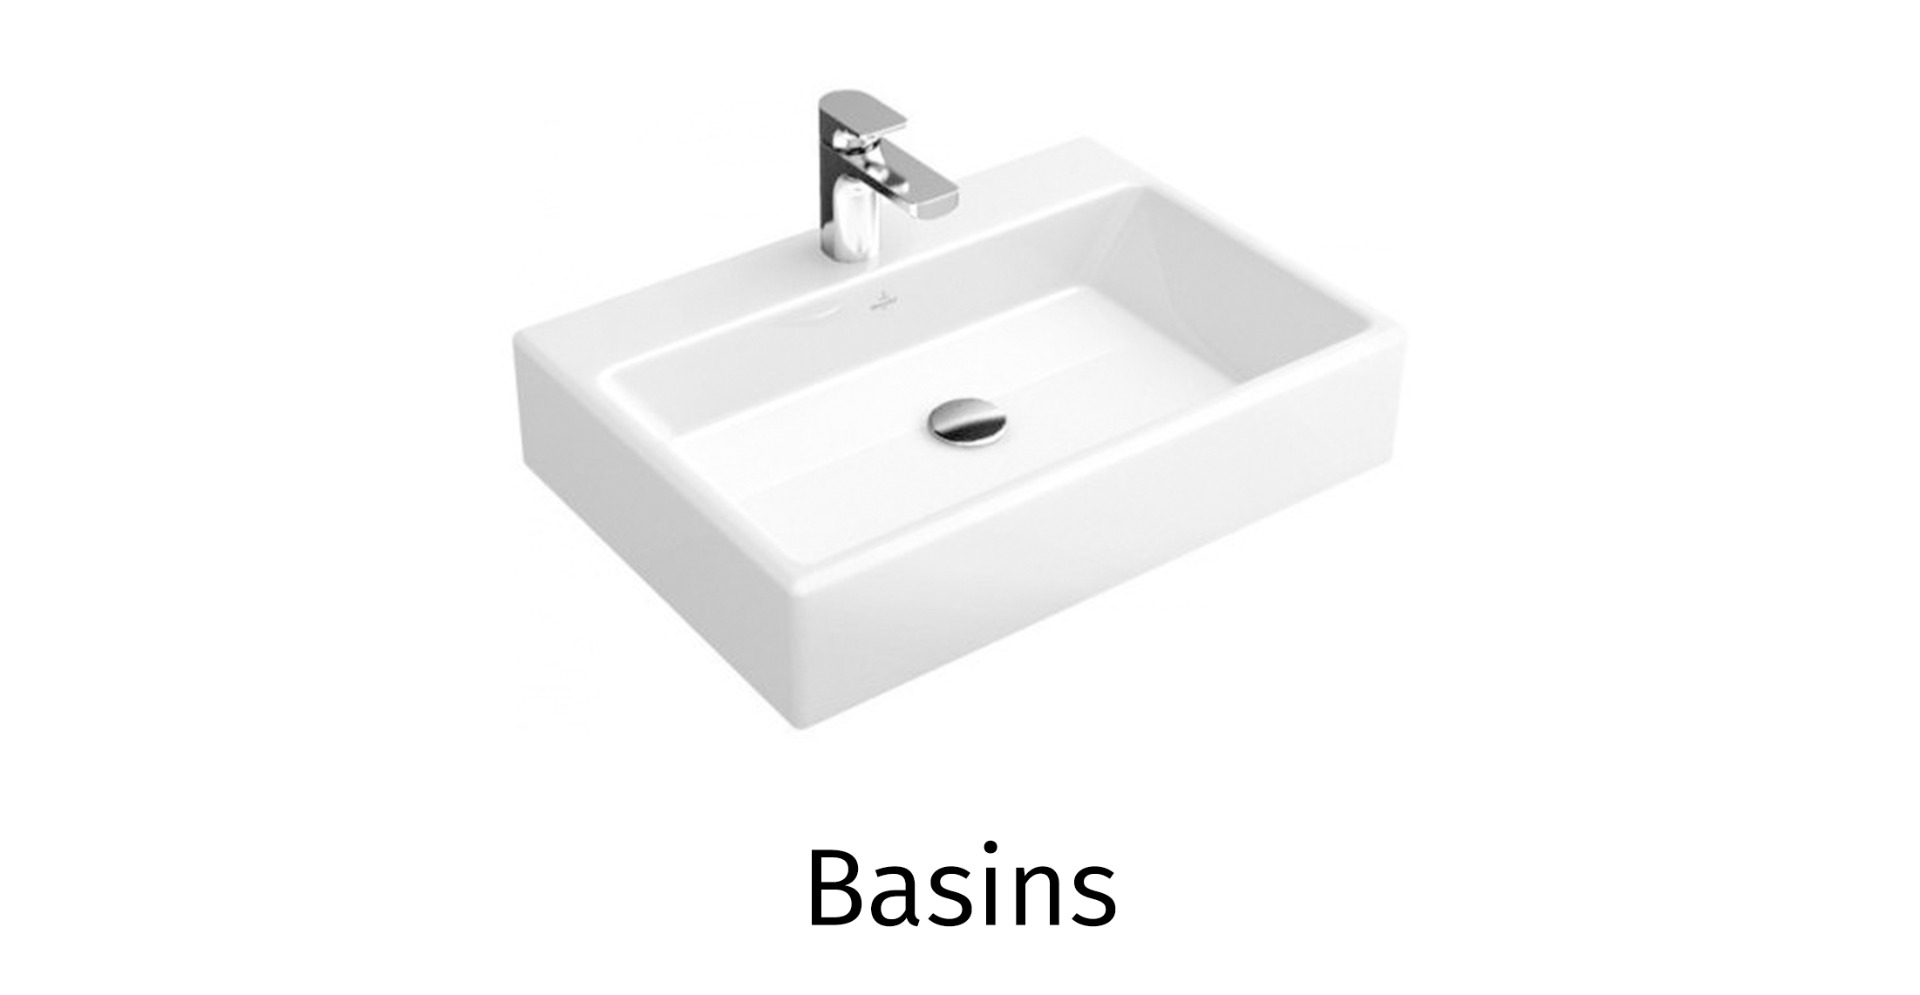 Basins